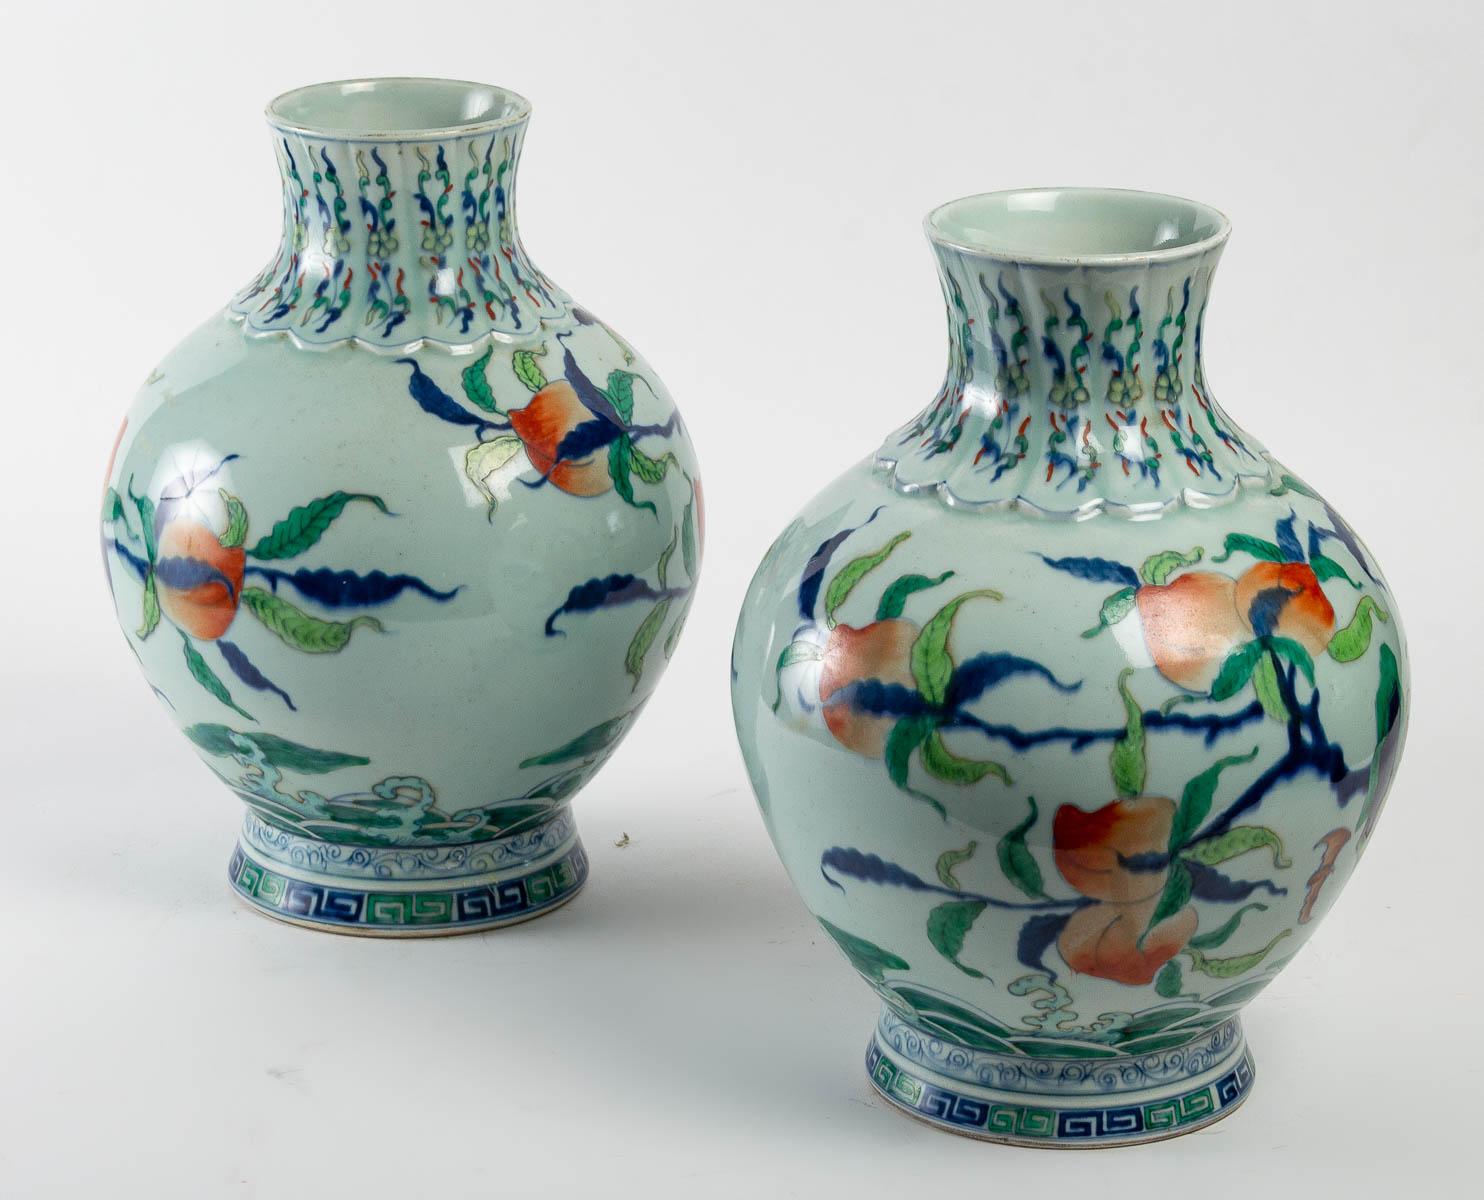 20th Century Pair of Vases with Peach of Longevity Decoration